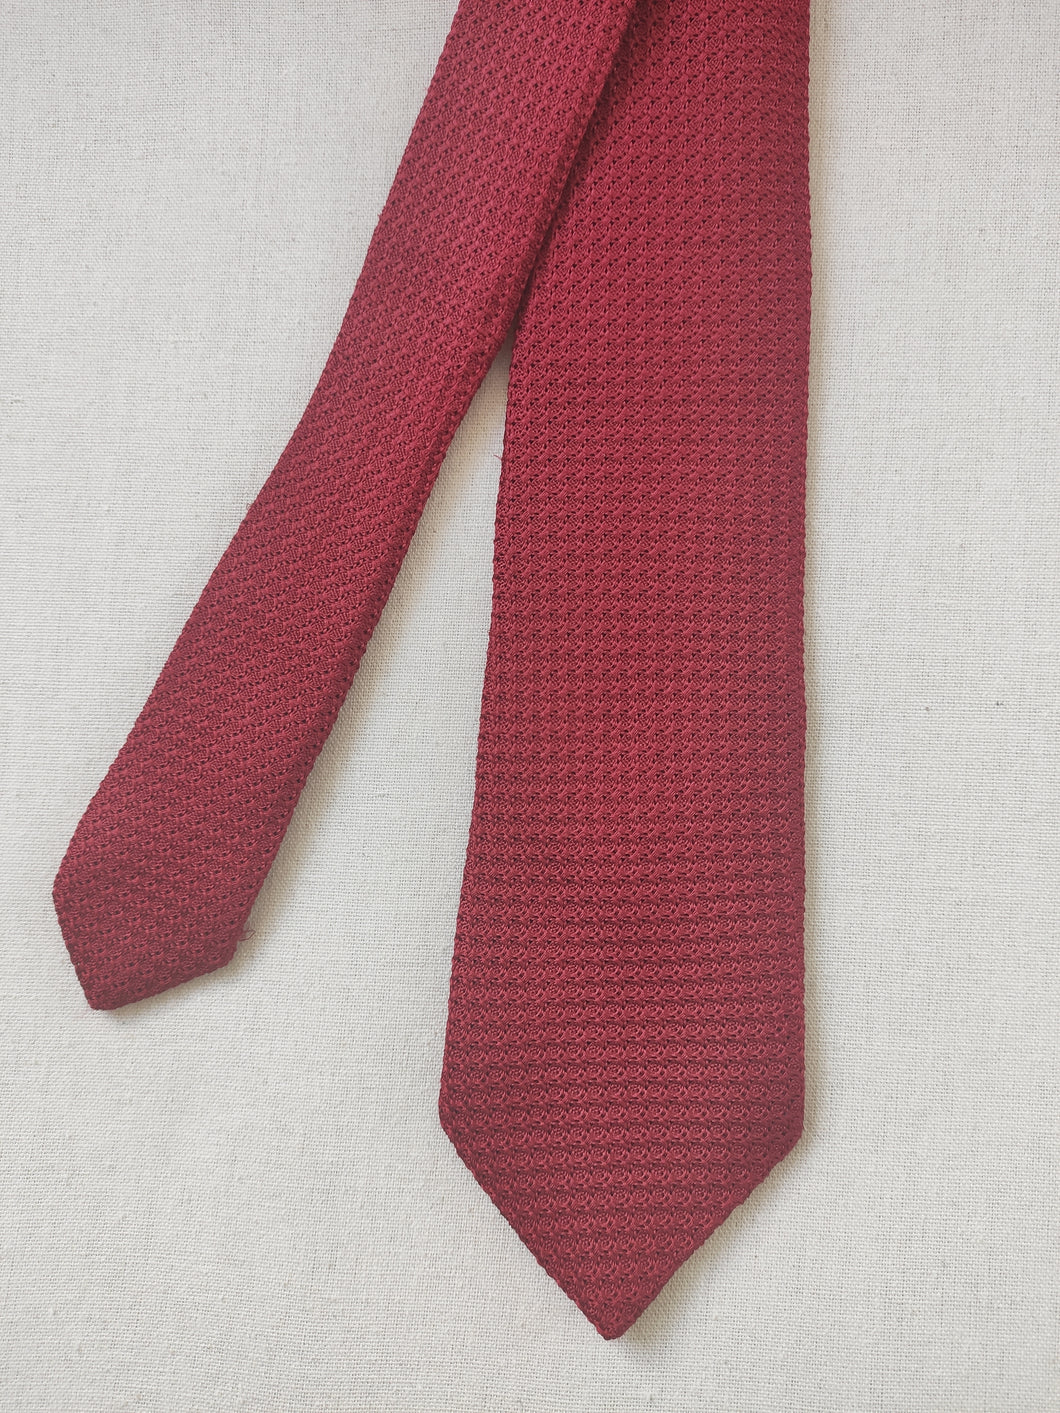 Cravate rouge grenadine de soie Made in France